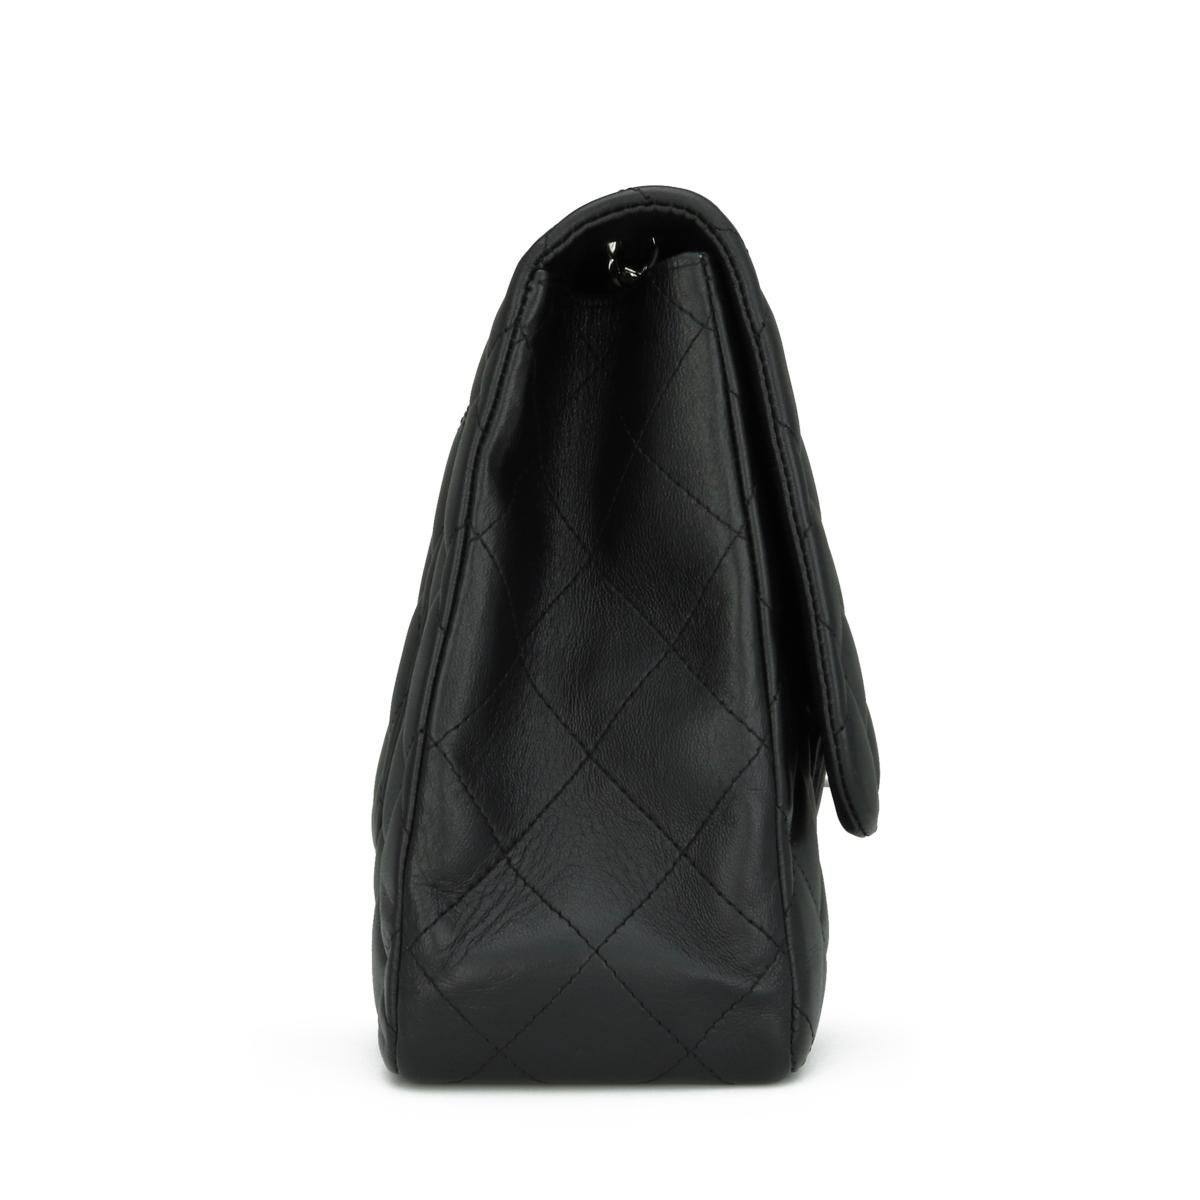 CHANEL Single Flap Jumbo Bag in Black Lambskin with Silver-Tone Hardware 2010 For Sale 2